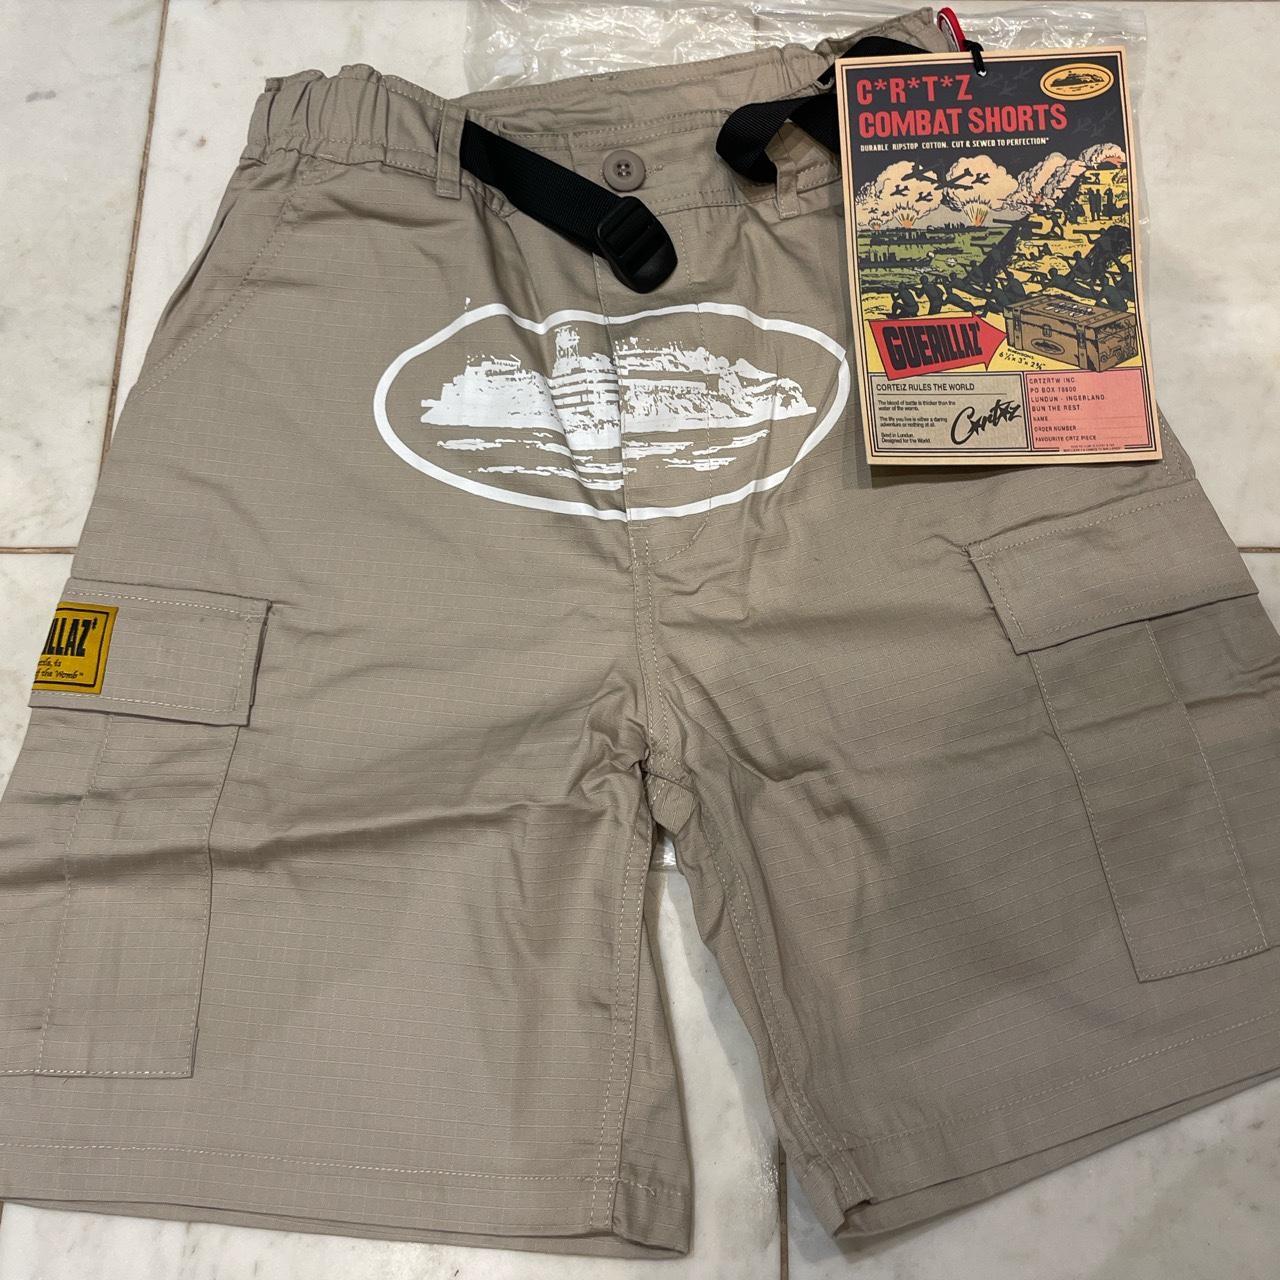 Cortez Alcatraz Guerillaz Cargo Shorts in - Depop